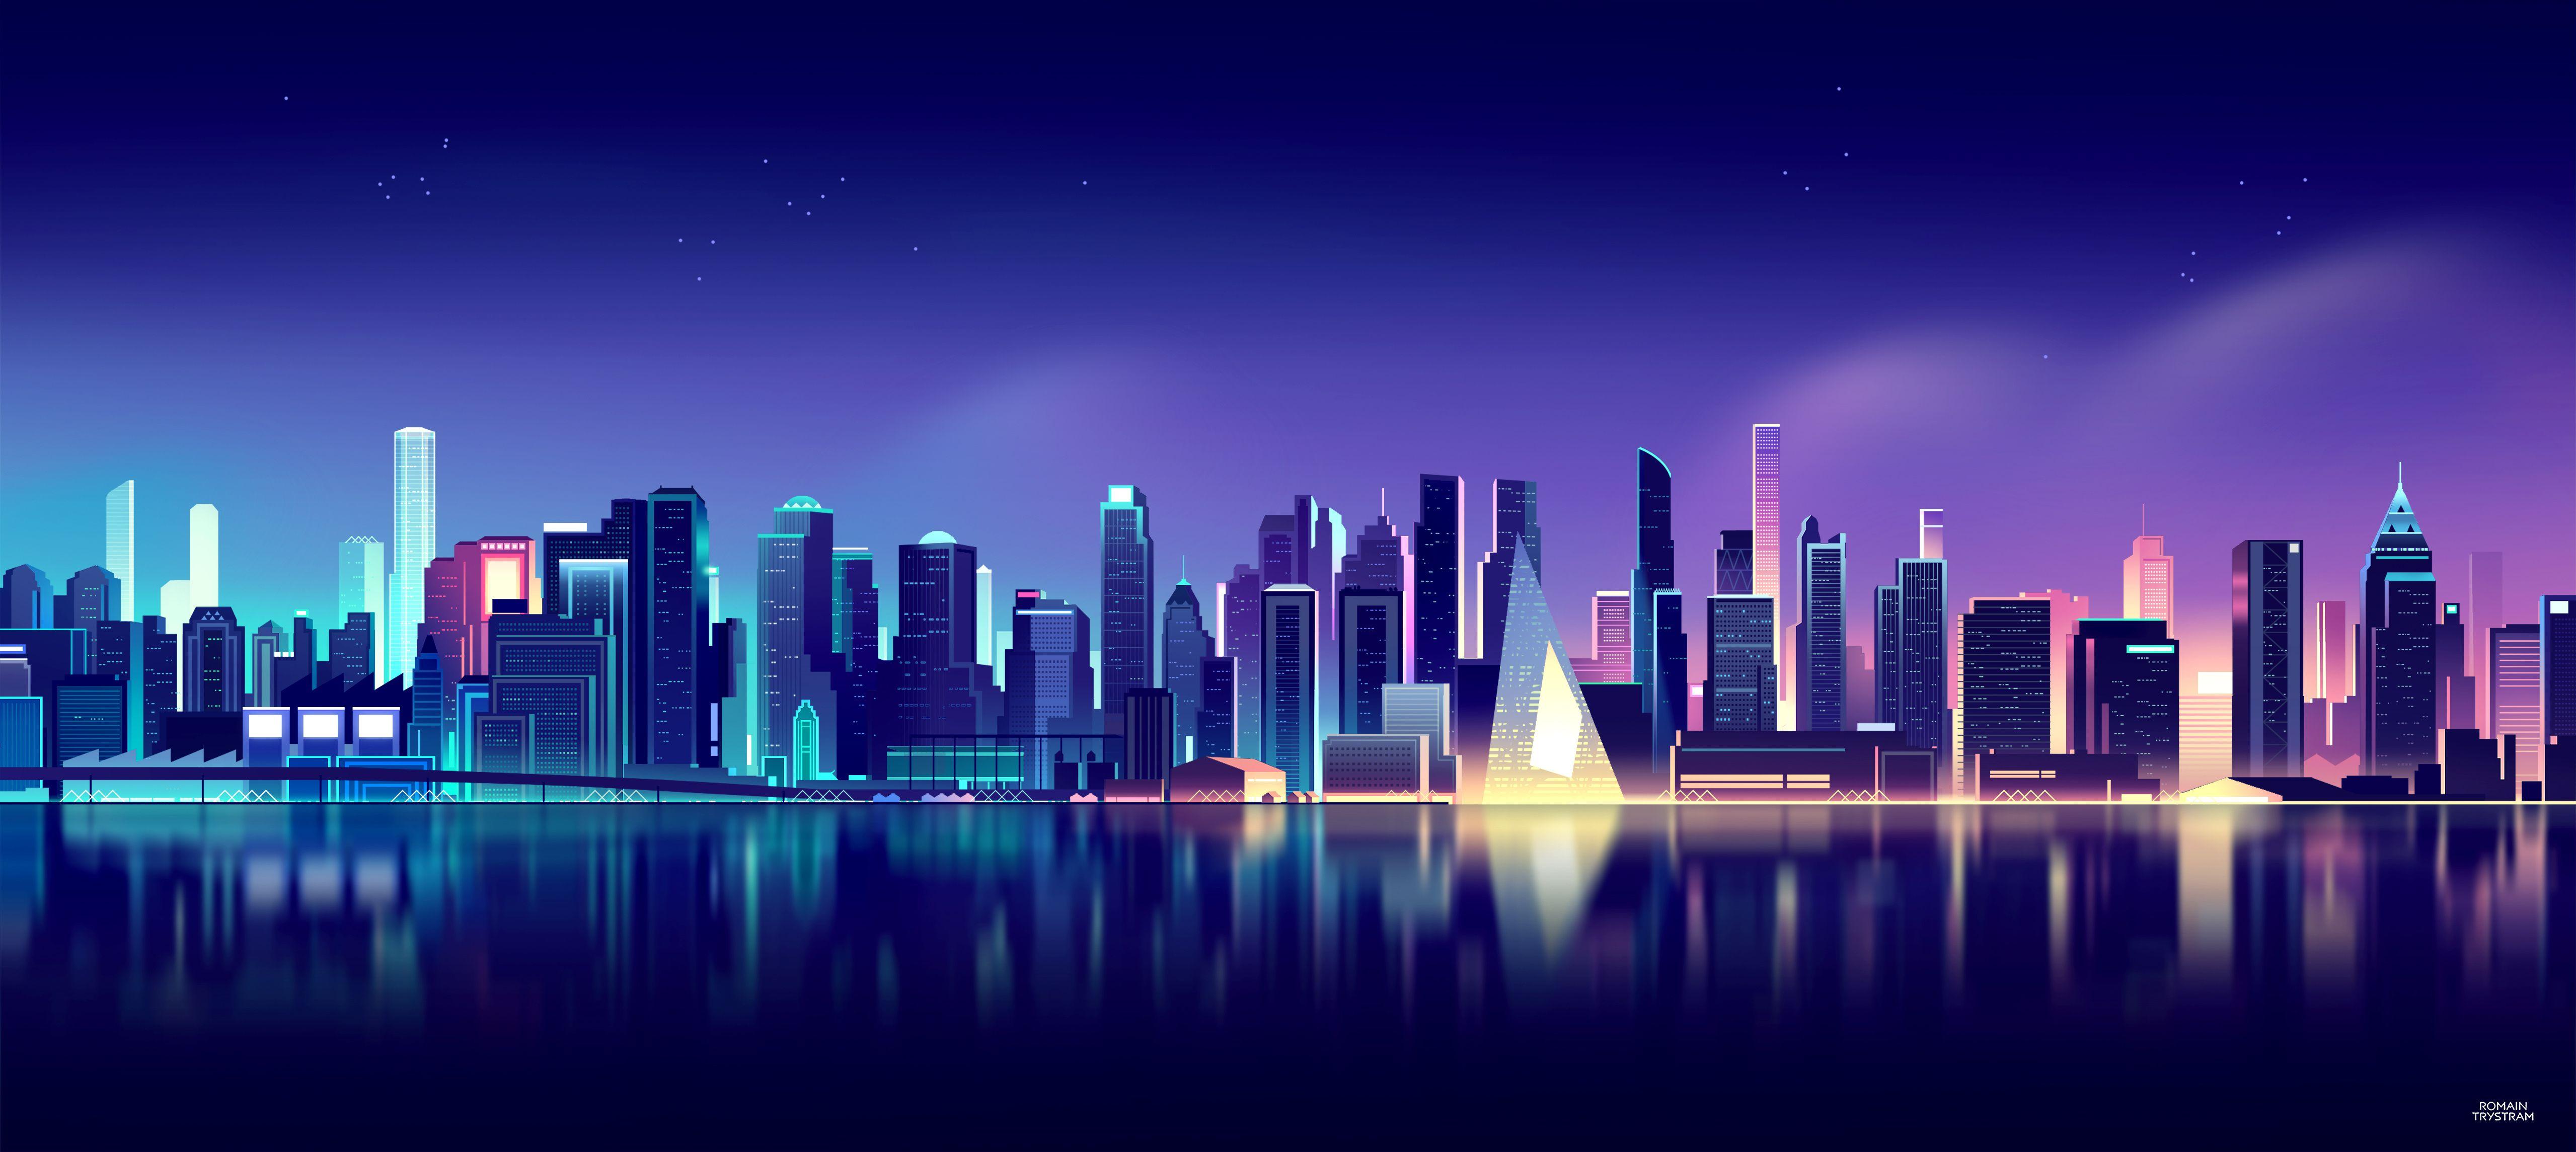 Purple Cityscape Wallpapers - Top Free Purple Cityscape Backgrounds